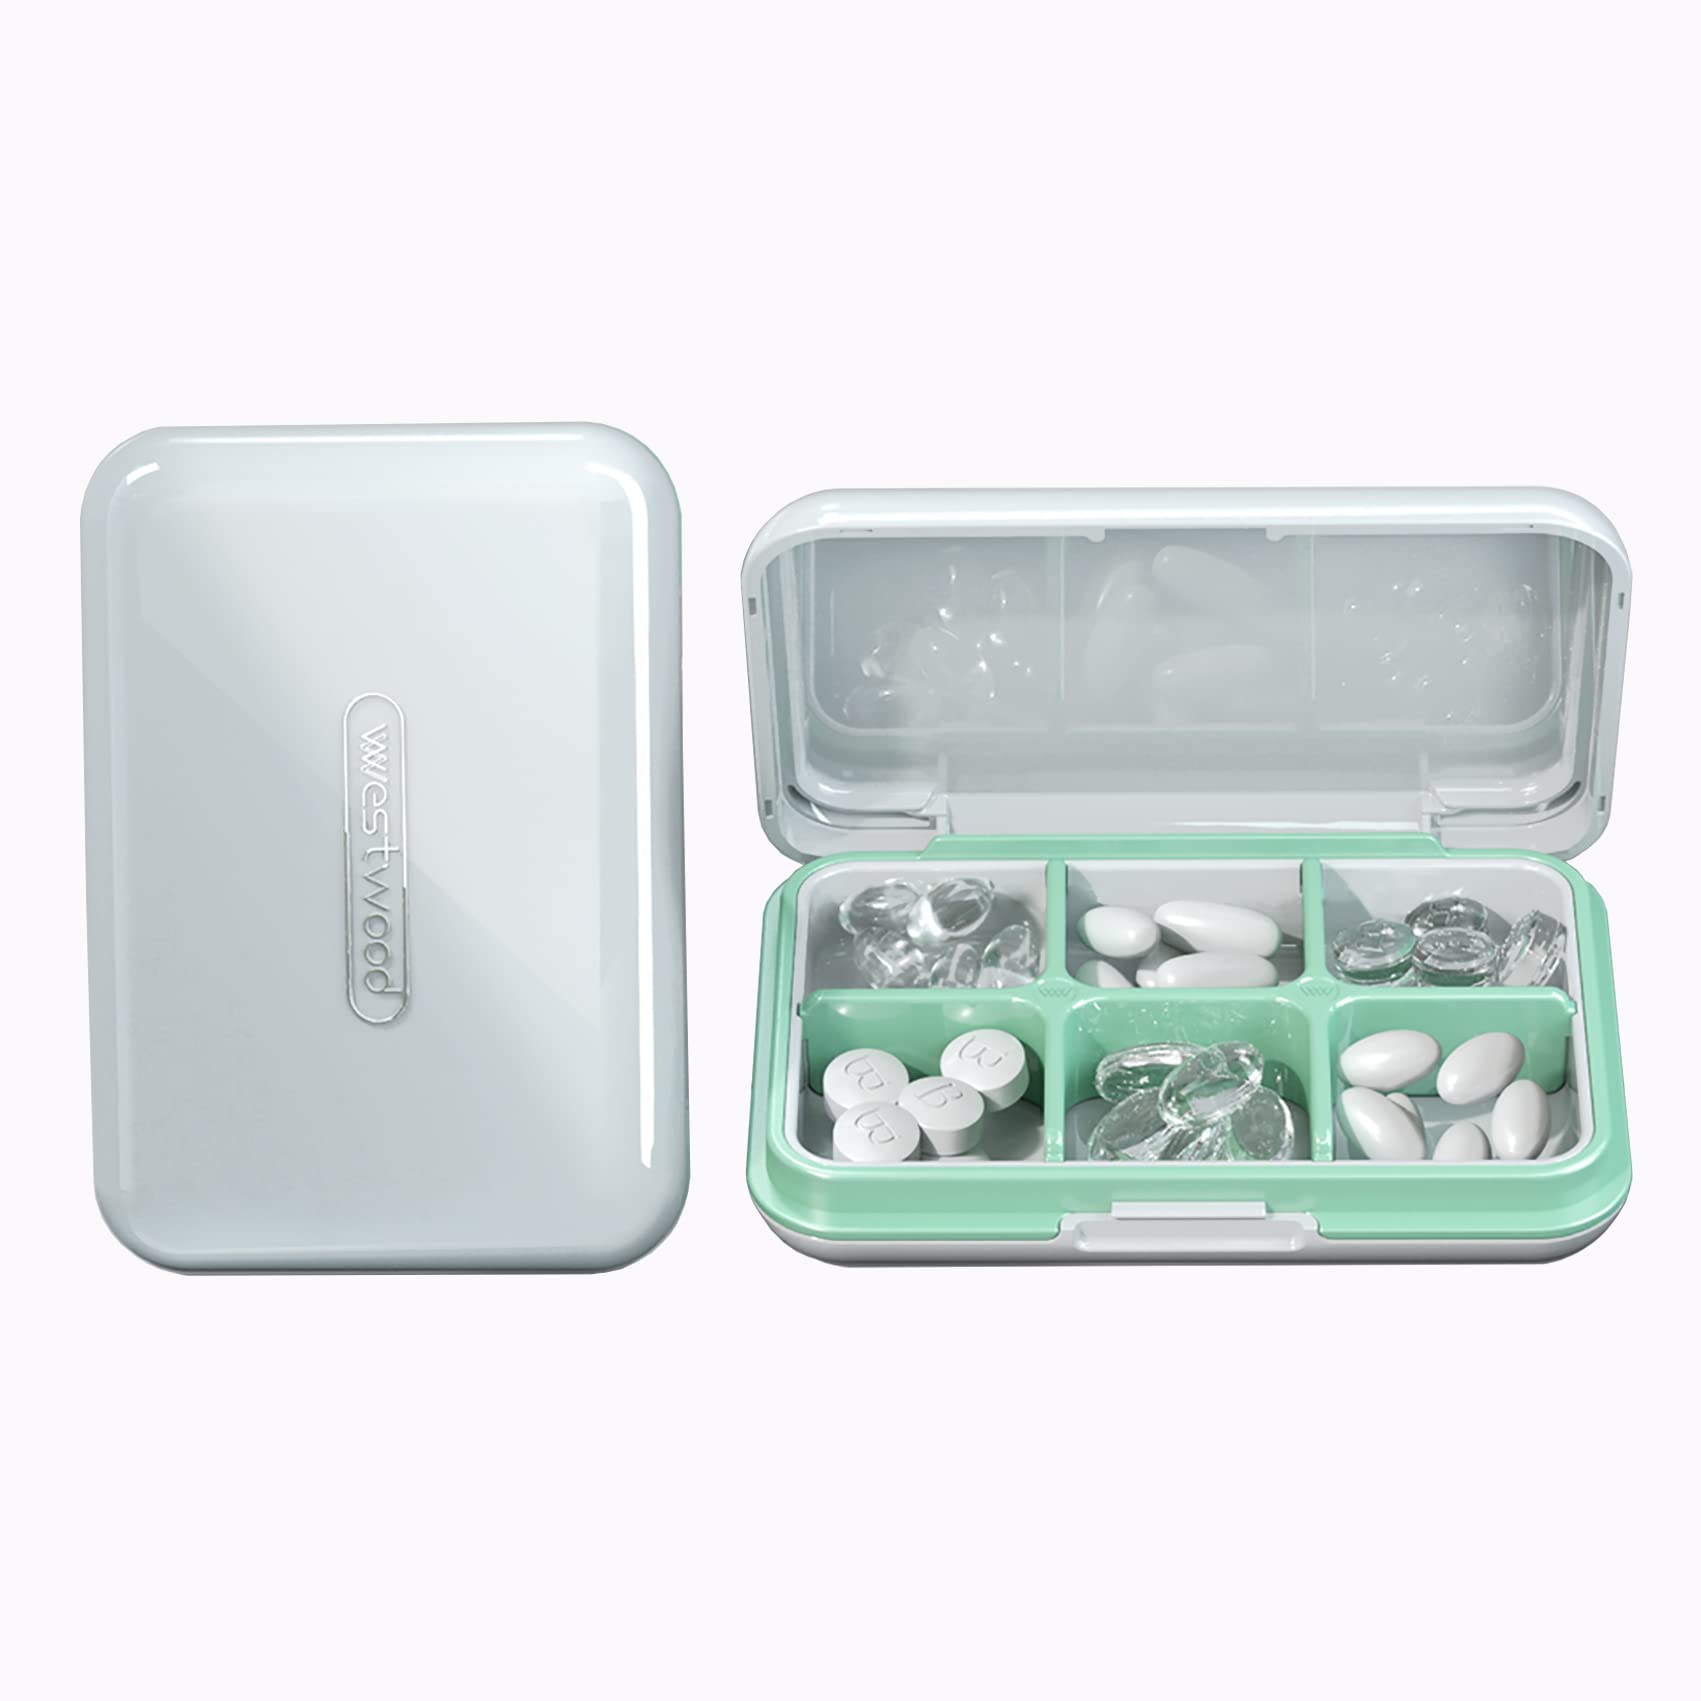 dubstar DUBSTAR Pill Case,Small Pill Box - Waterproof Portable Daily Small  Pill Case for Purses Pocket Compact Travel Medicine Holder fo